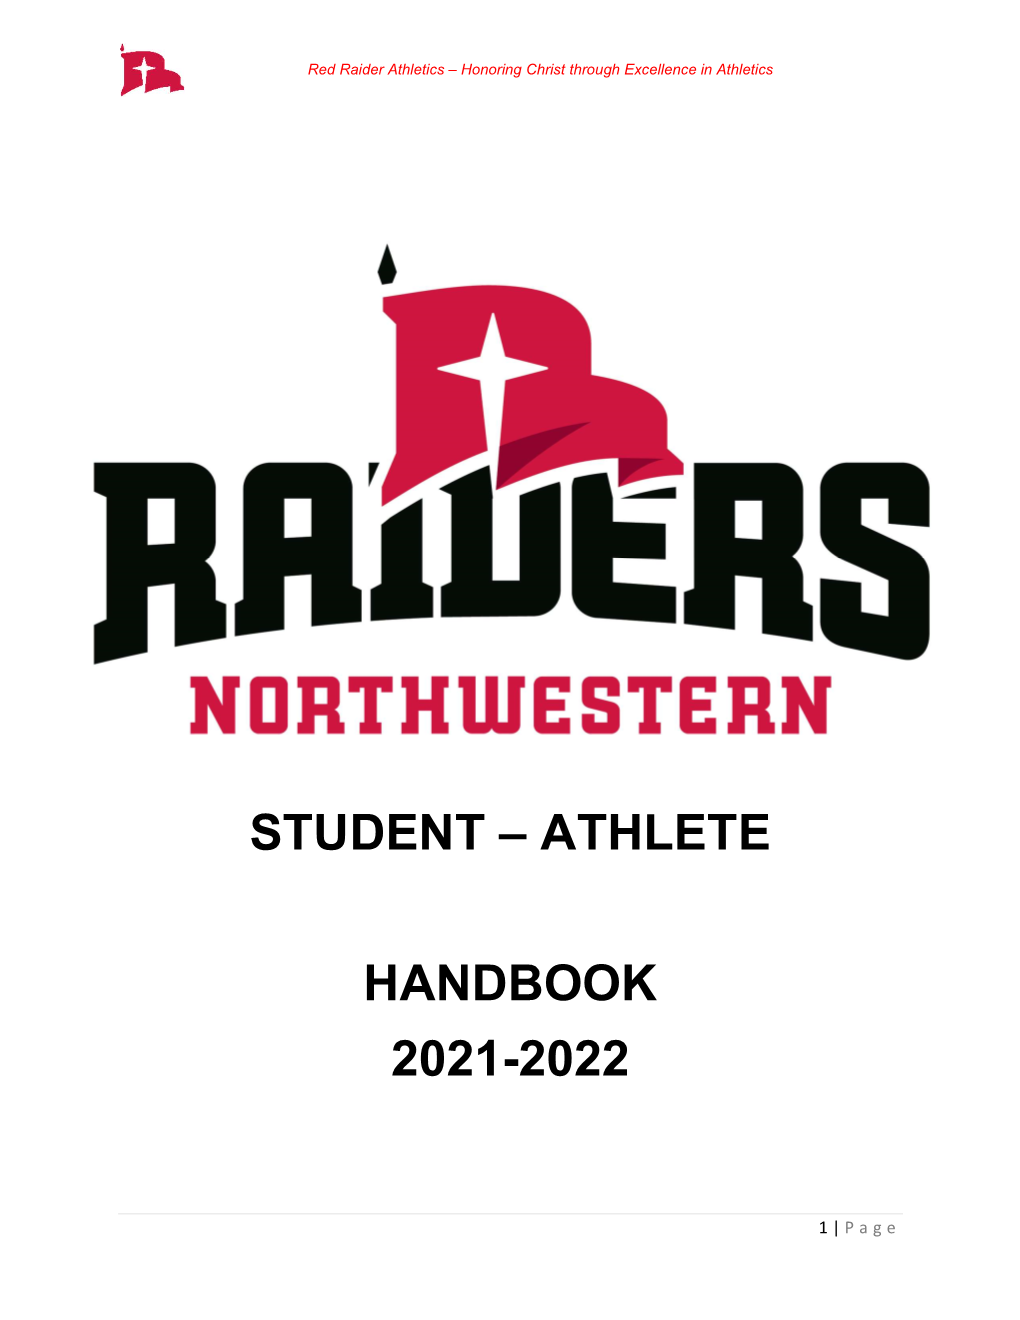 Student – Athlete Handbook 2021-2022